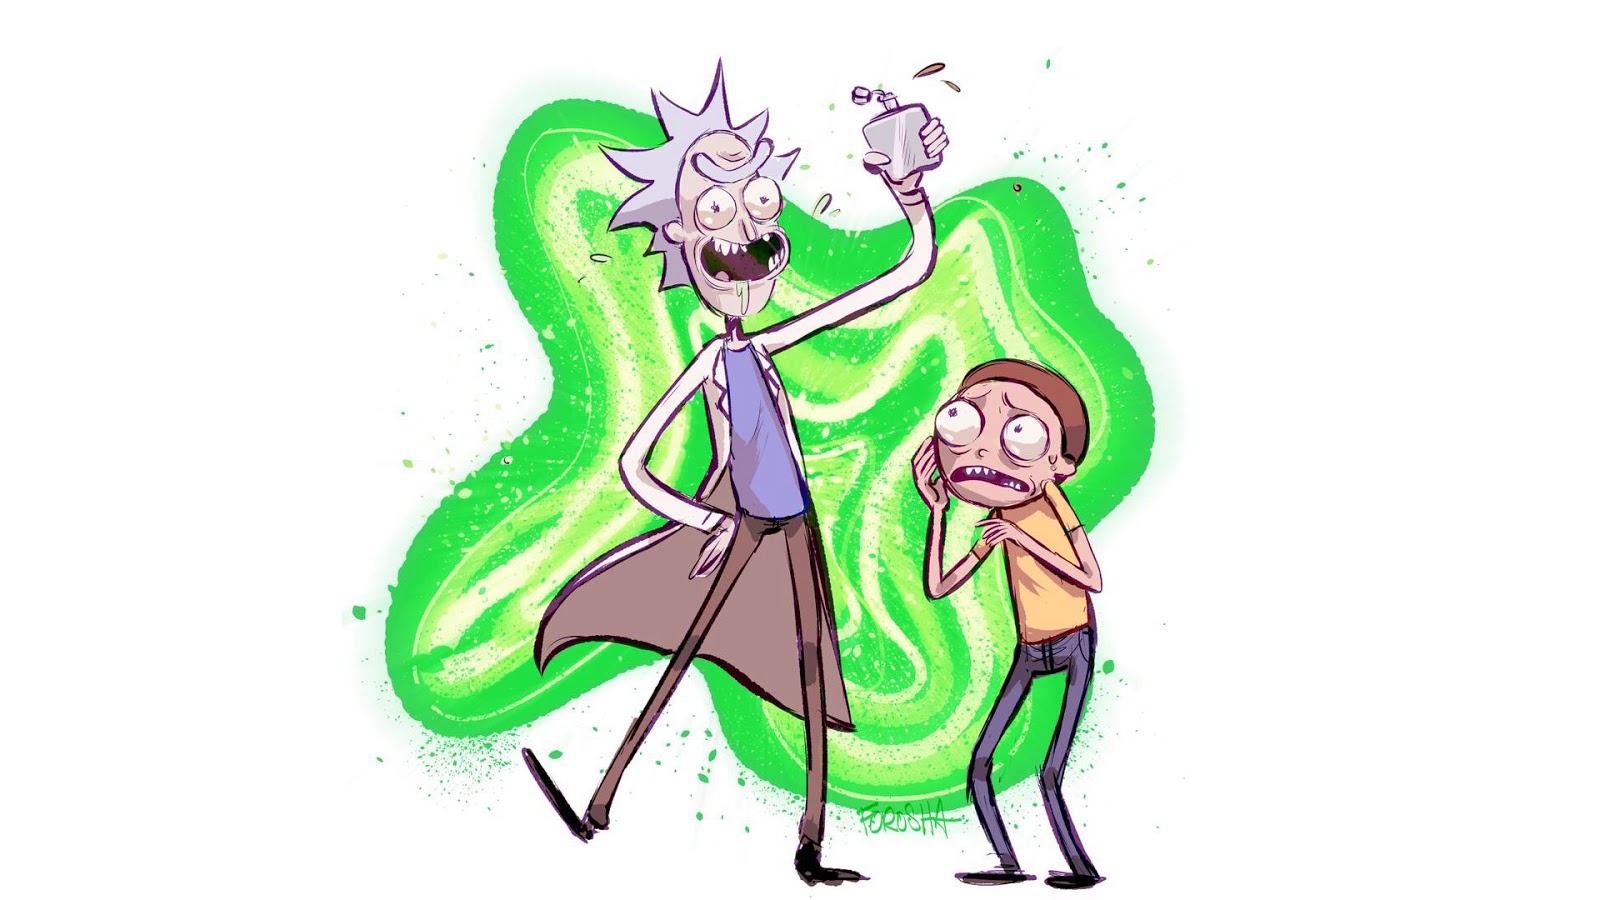 Rick and Morty Wallpaper